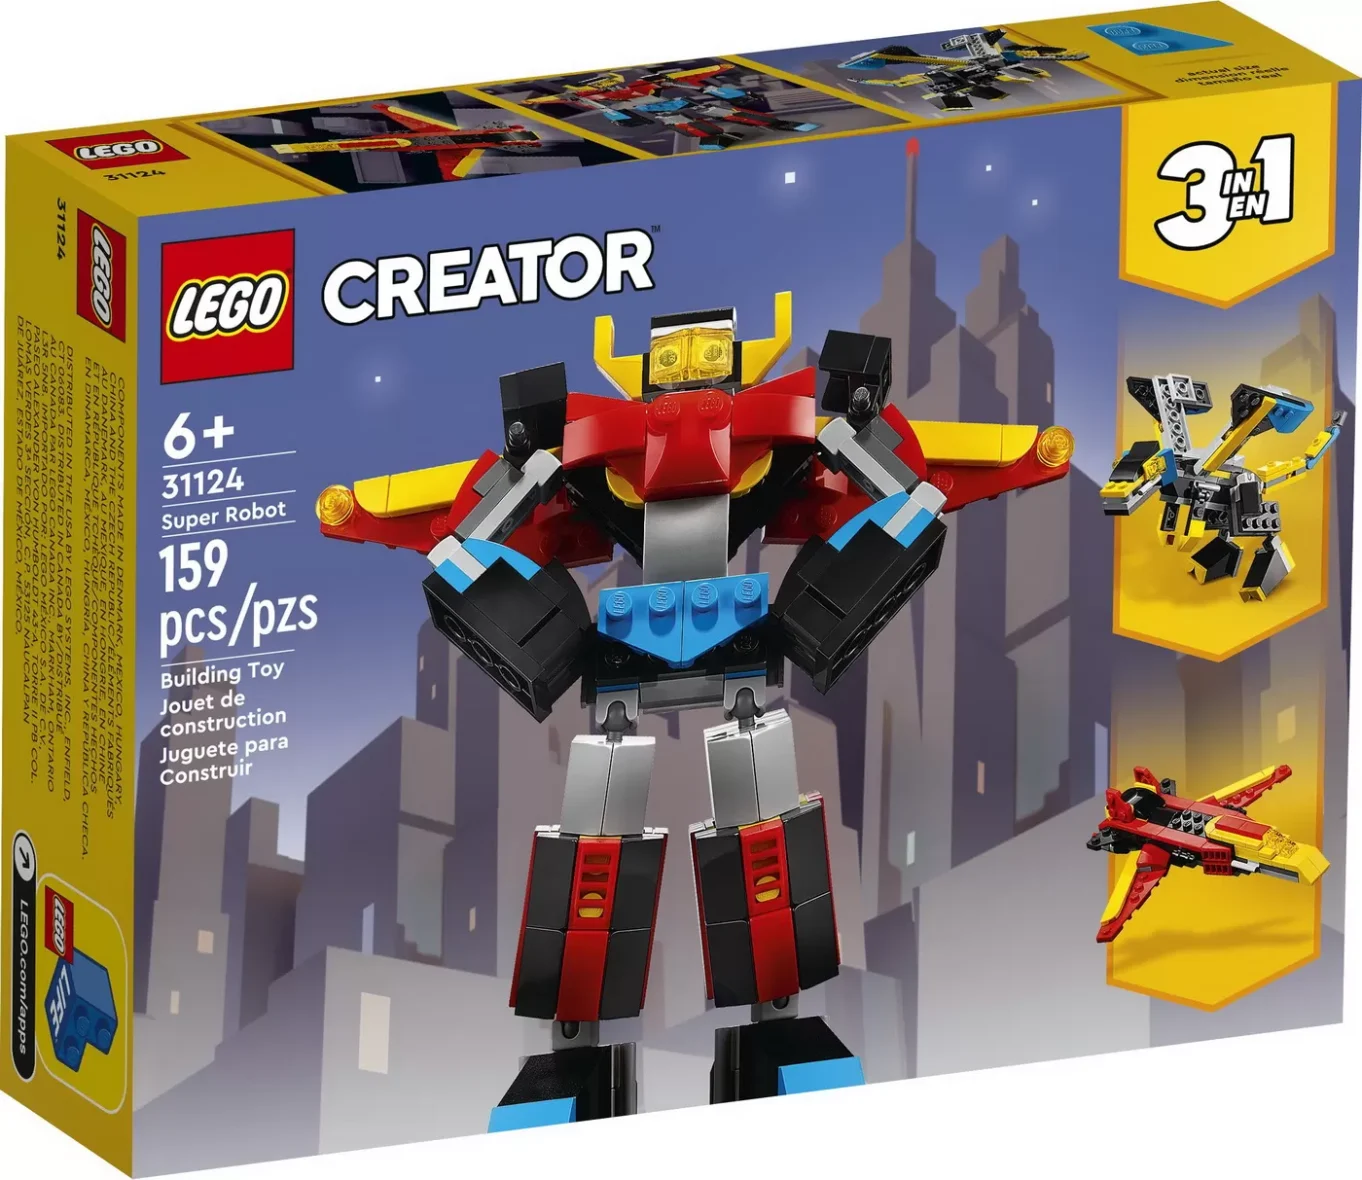 LEGO CREATOR SUPER ROBOT 31124